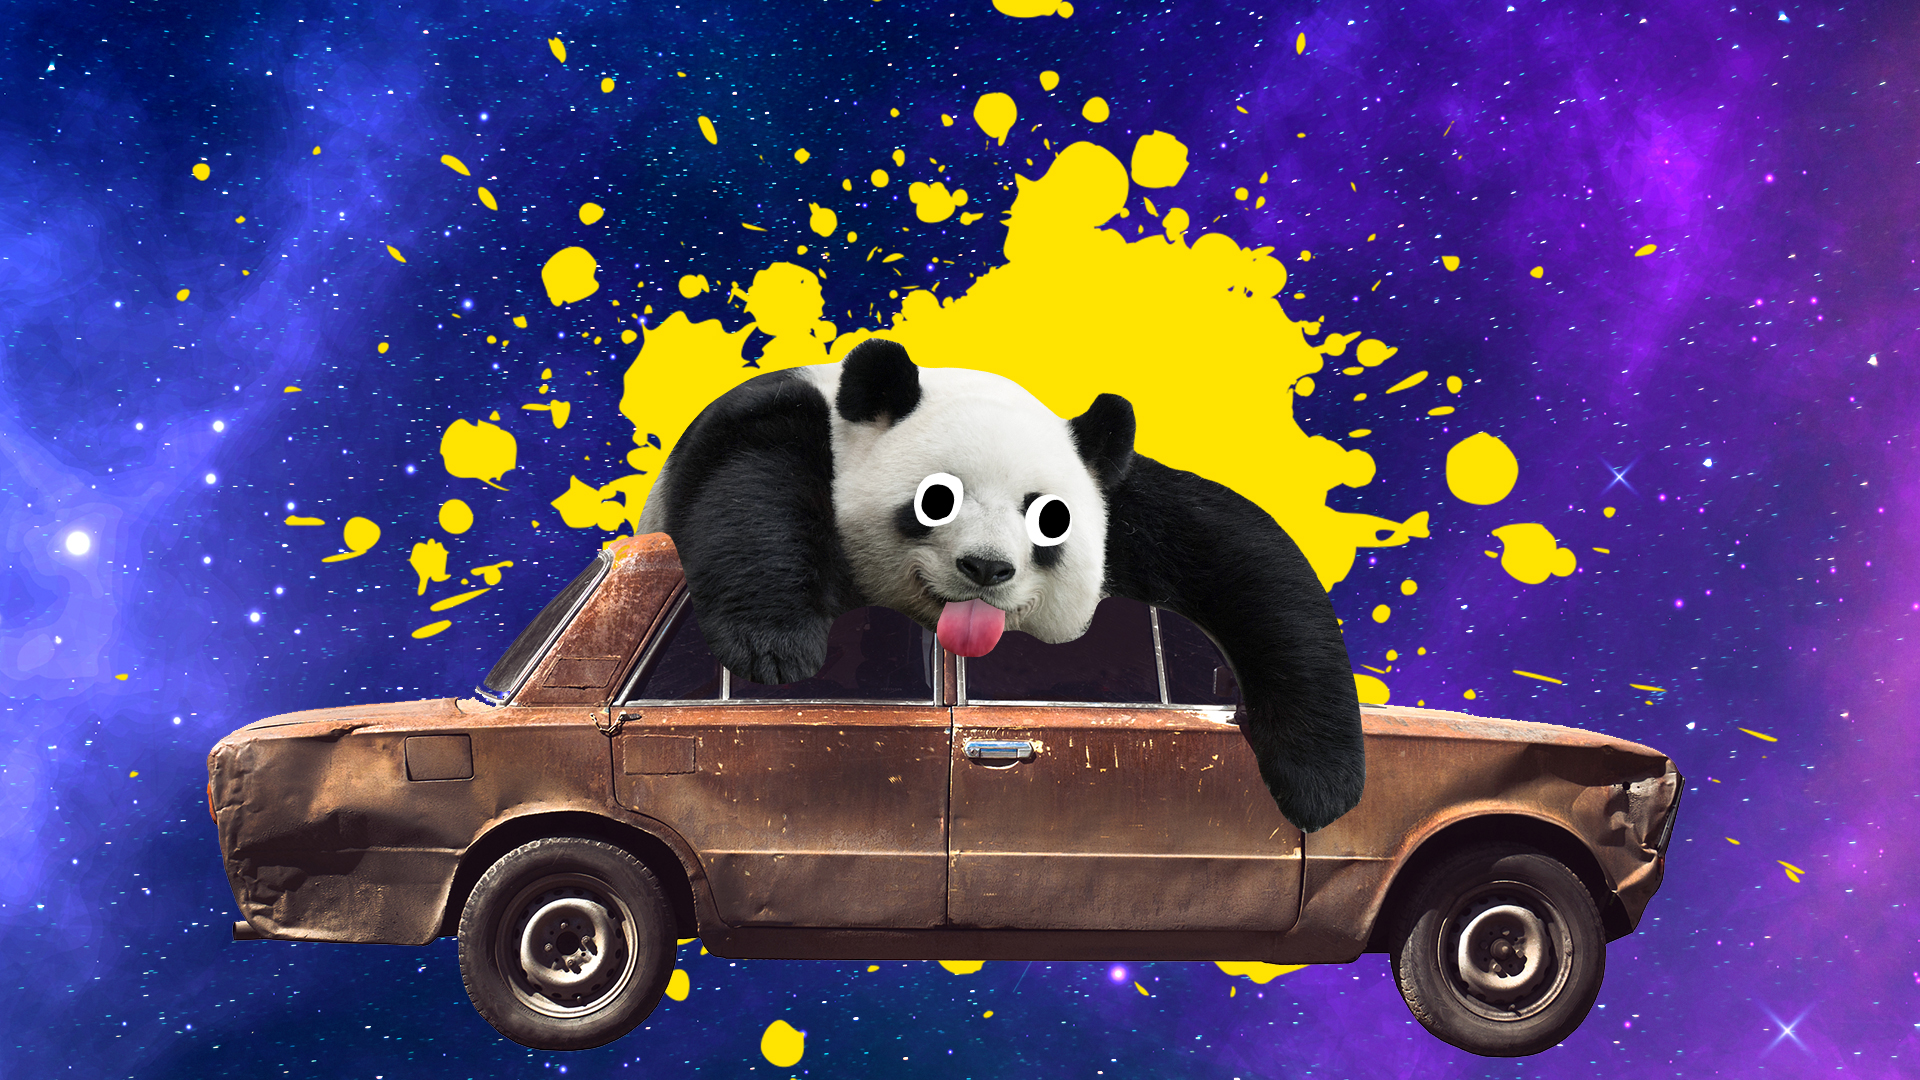 A rusty car has a panda on it